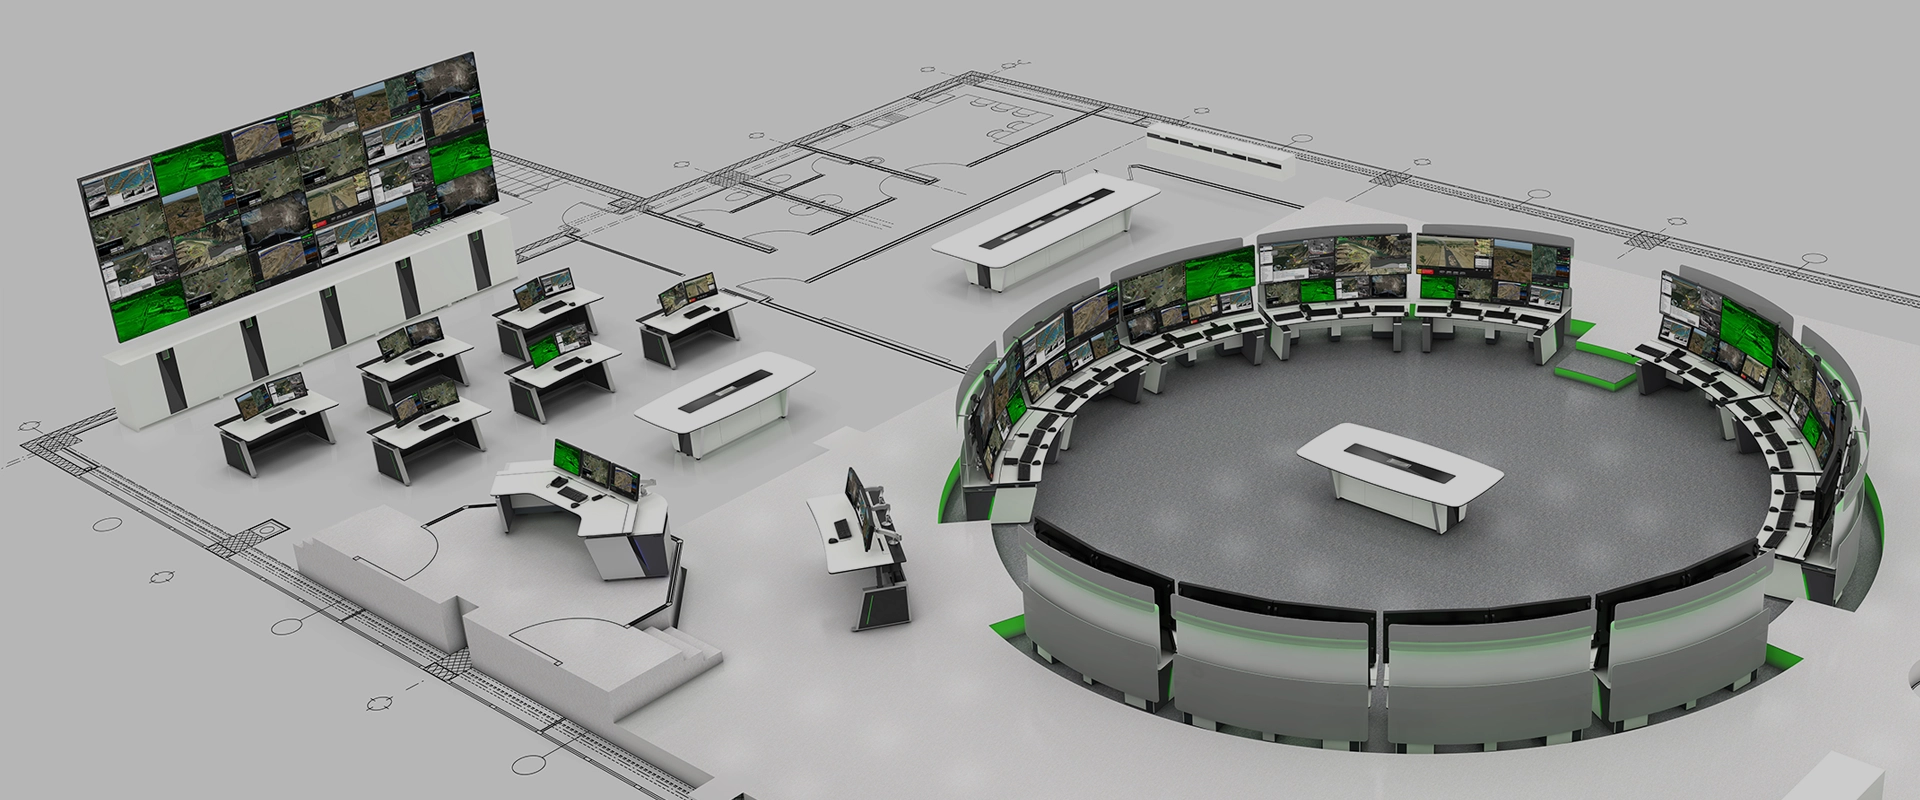 LundHalsey ClonBio Bioenergy Process Control Operations Control Centre